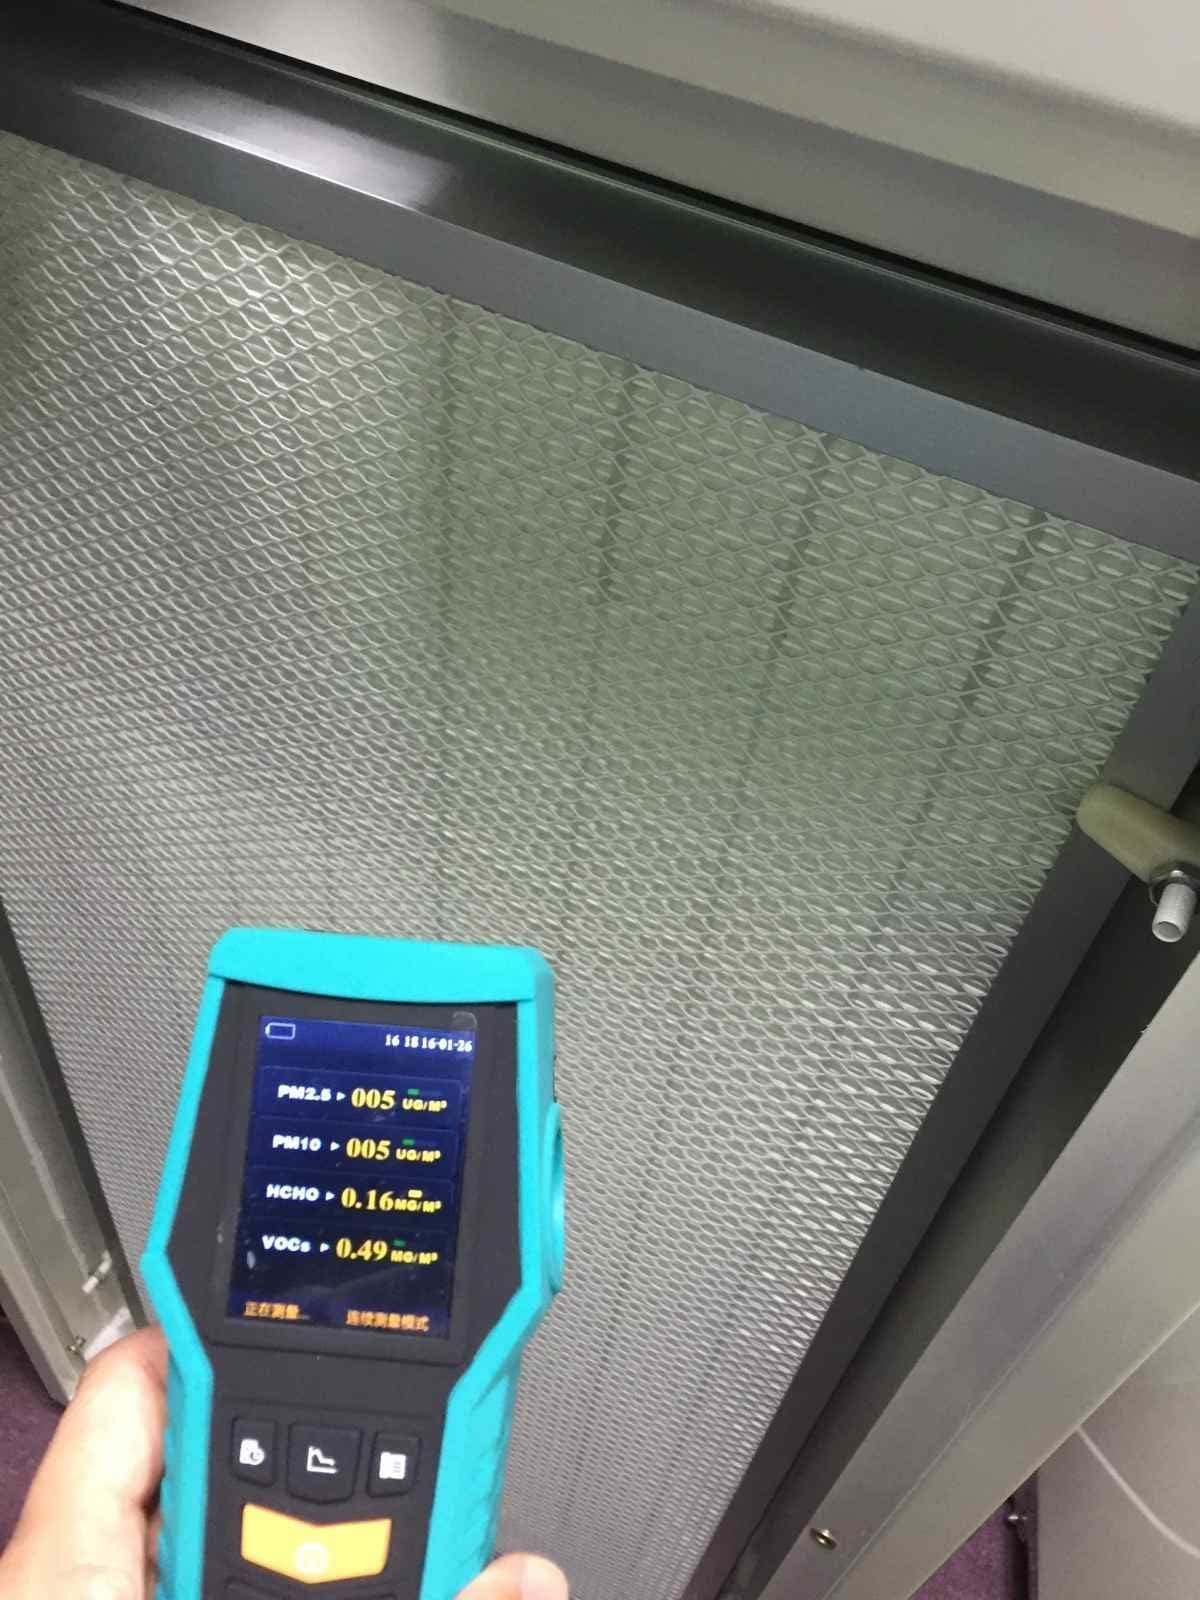 BRAMC - Smart 126 Indoor Air Quality Monitor